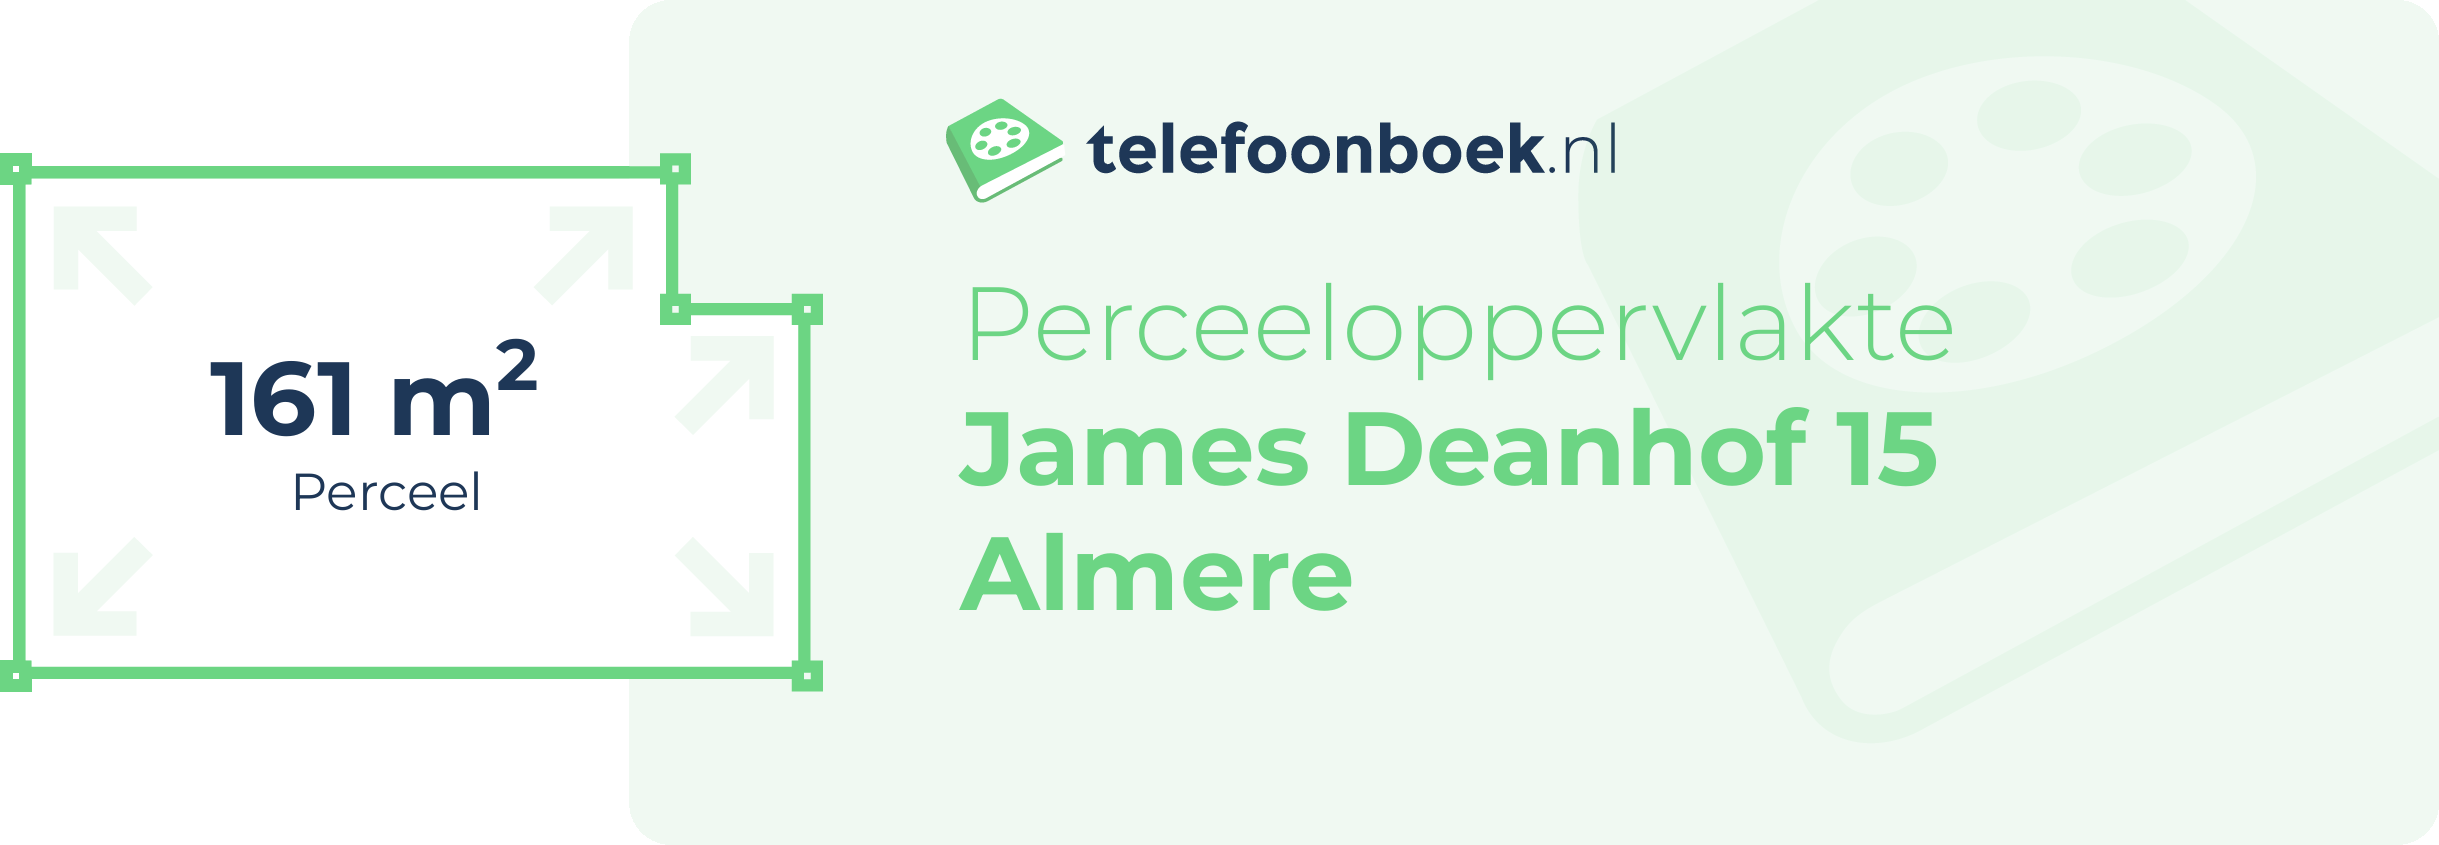 Perceeloppervlakte James Deanhof 15 Almere